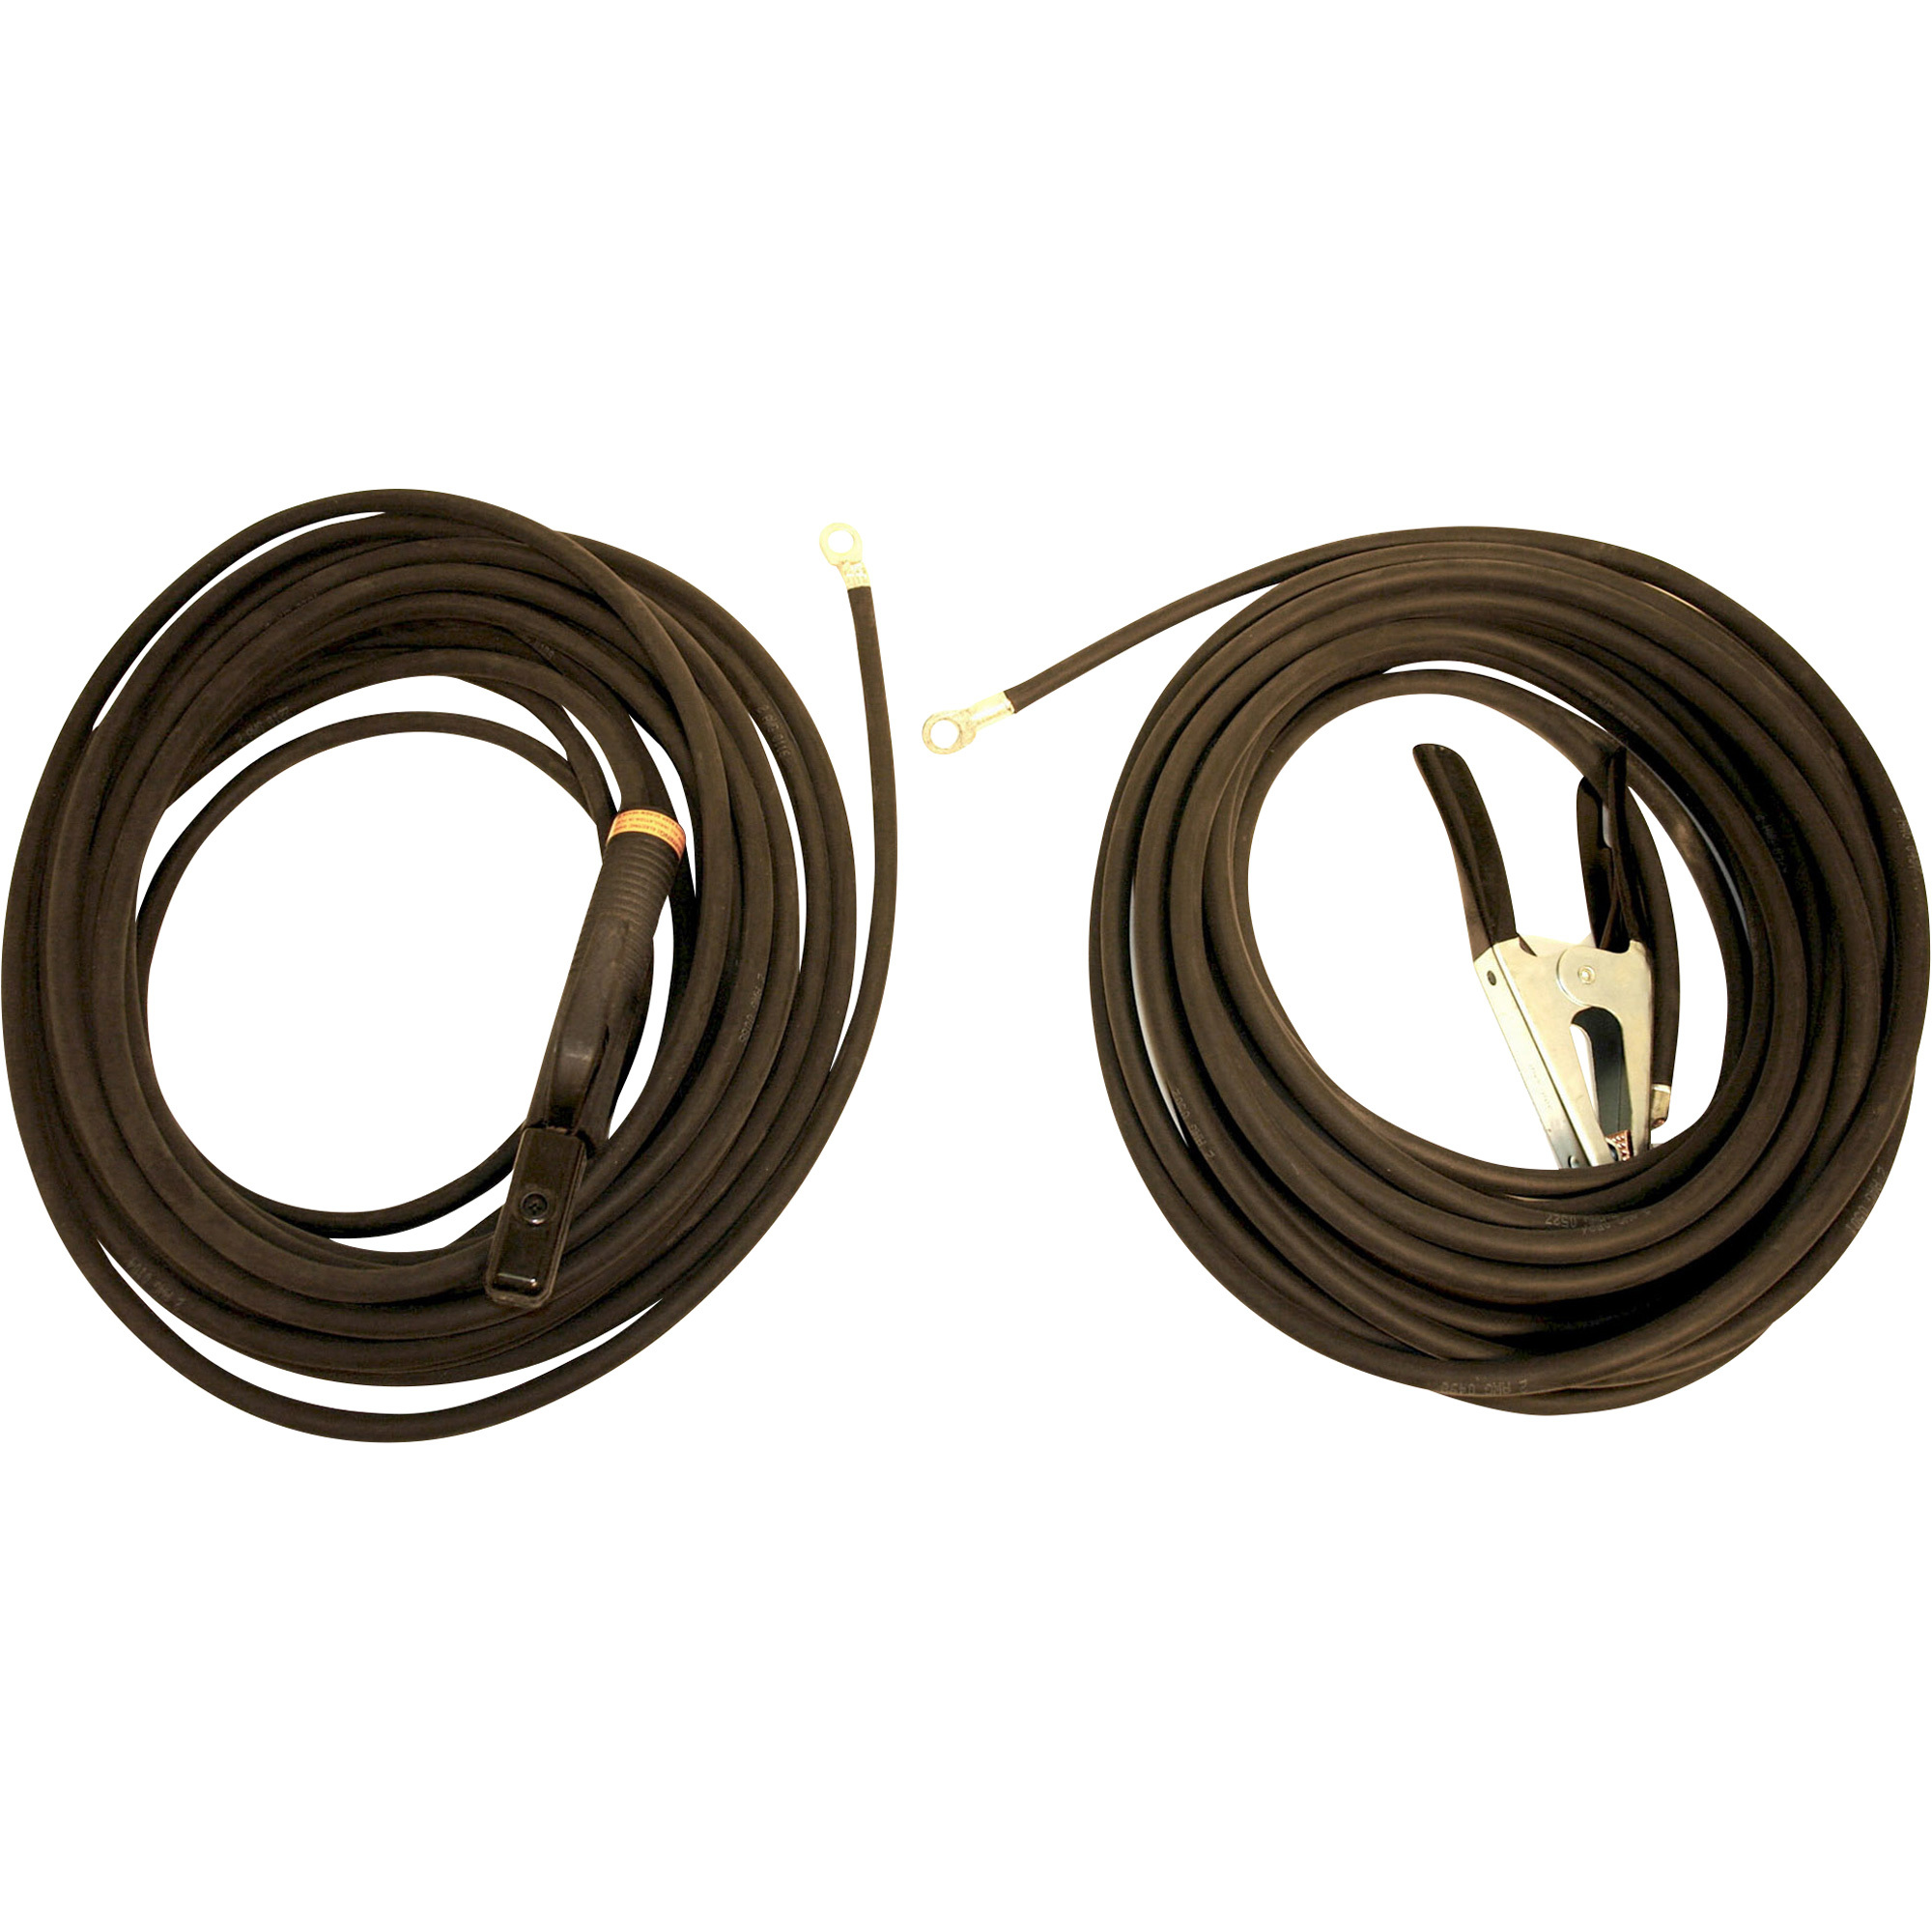 Hobart Welding Stick Cable Set â No. 2, 50ft. Electrode Cable with Holder, 50ft. Work Cable with Clamp, 2-Piece Set, Model 195195